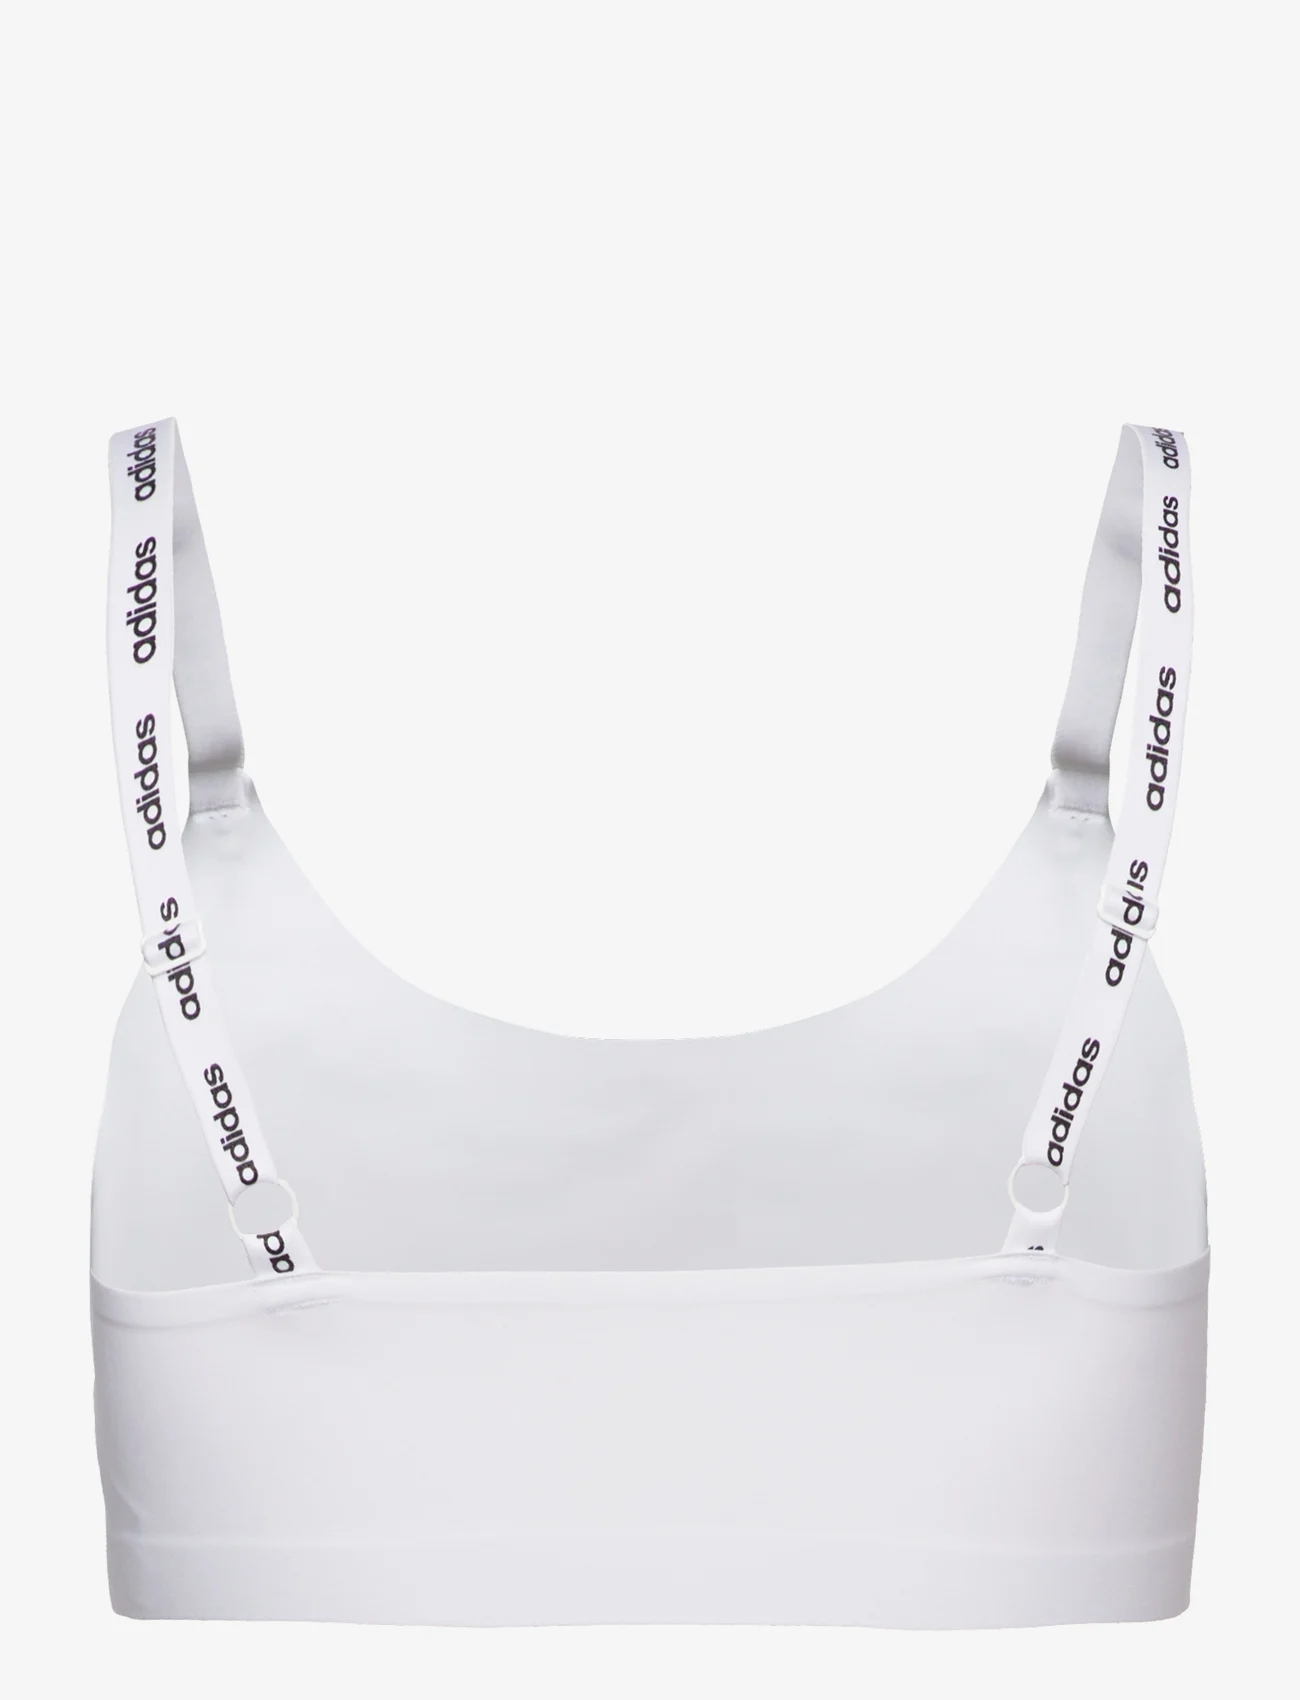 adidas Underwear - Bustier - madalaimad hinnad - white - 1